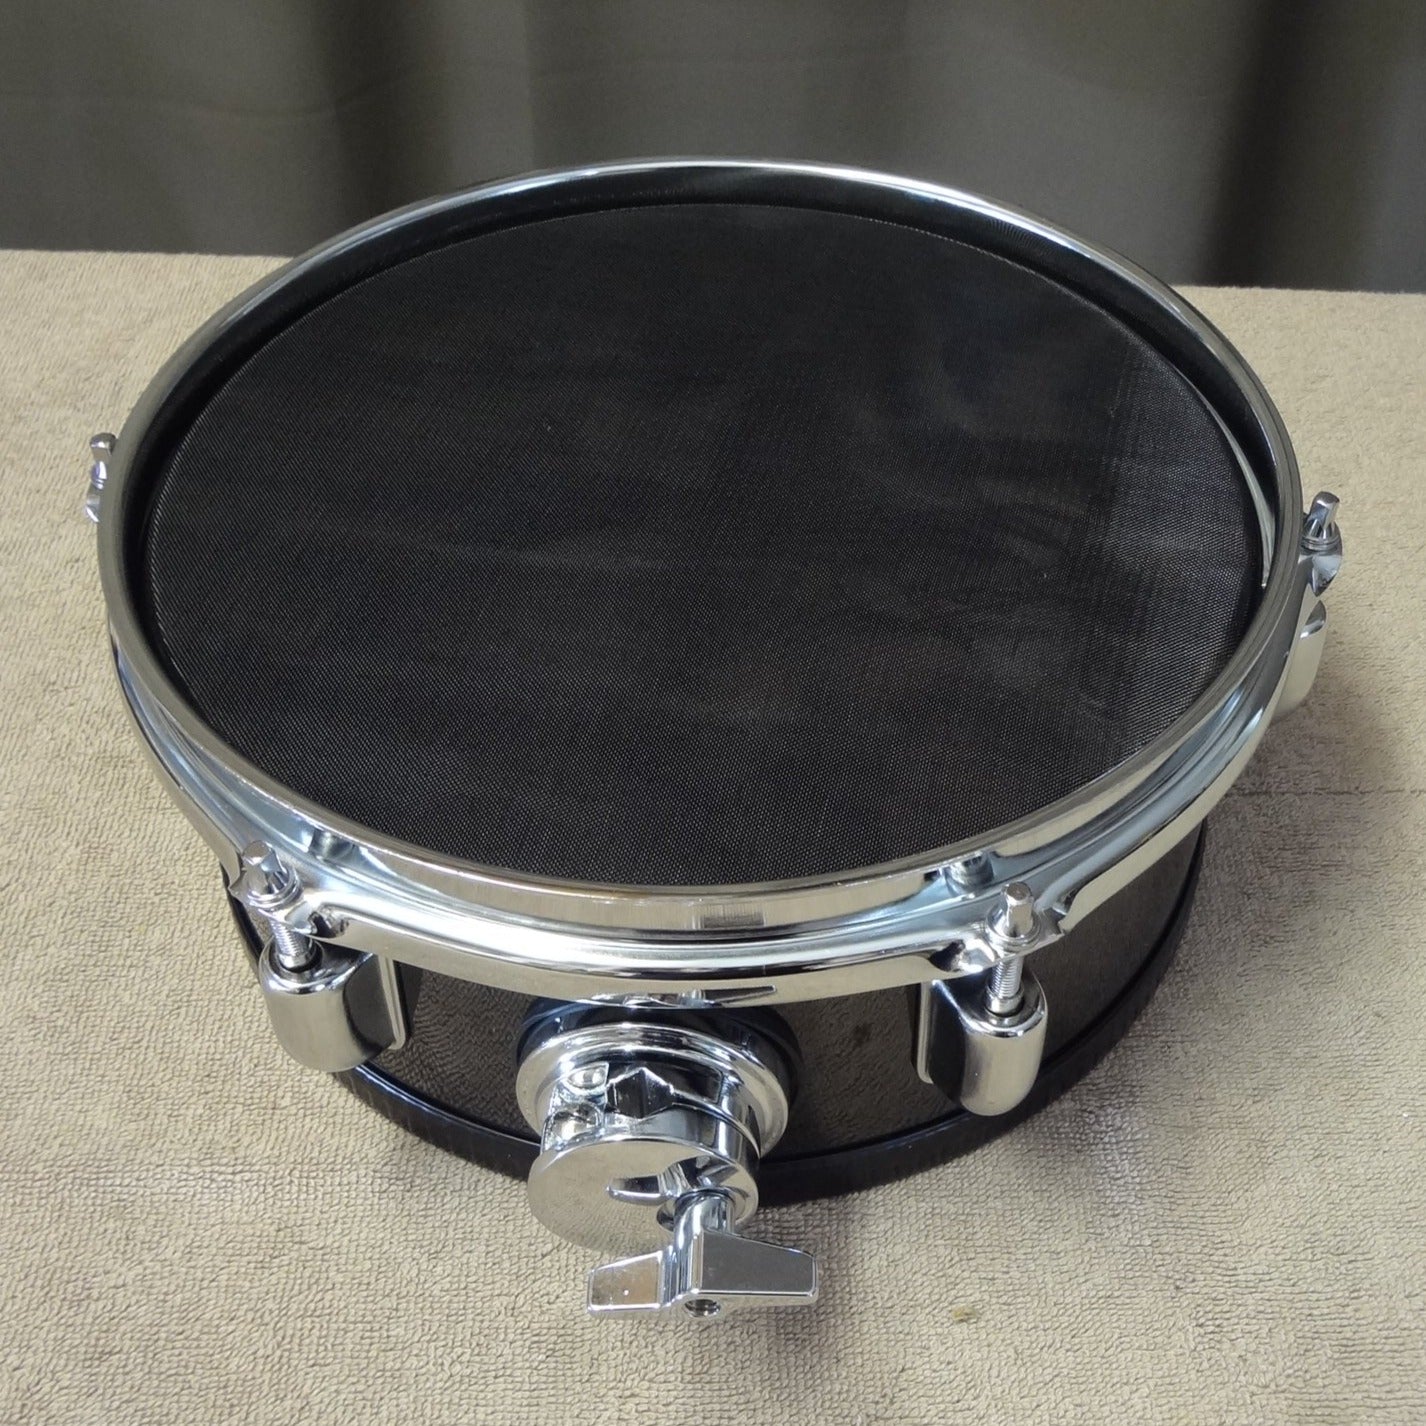 New 10 Inch Custom Electronic Snare Drum - Black Mono - Tin Chrome Lugs